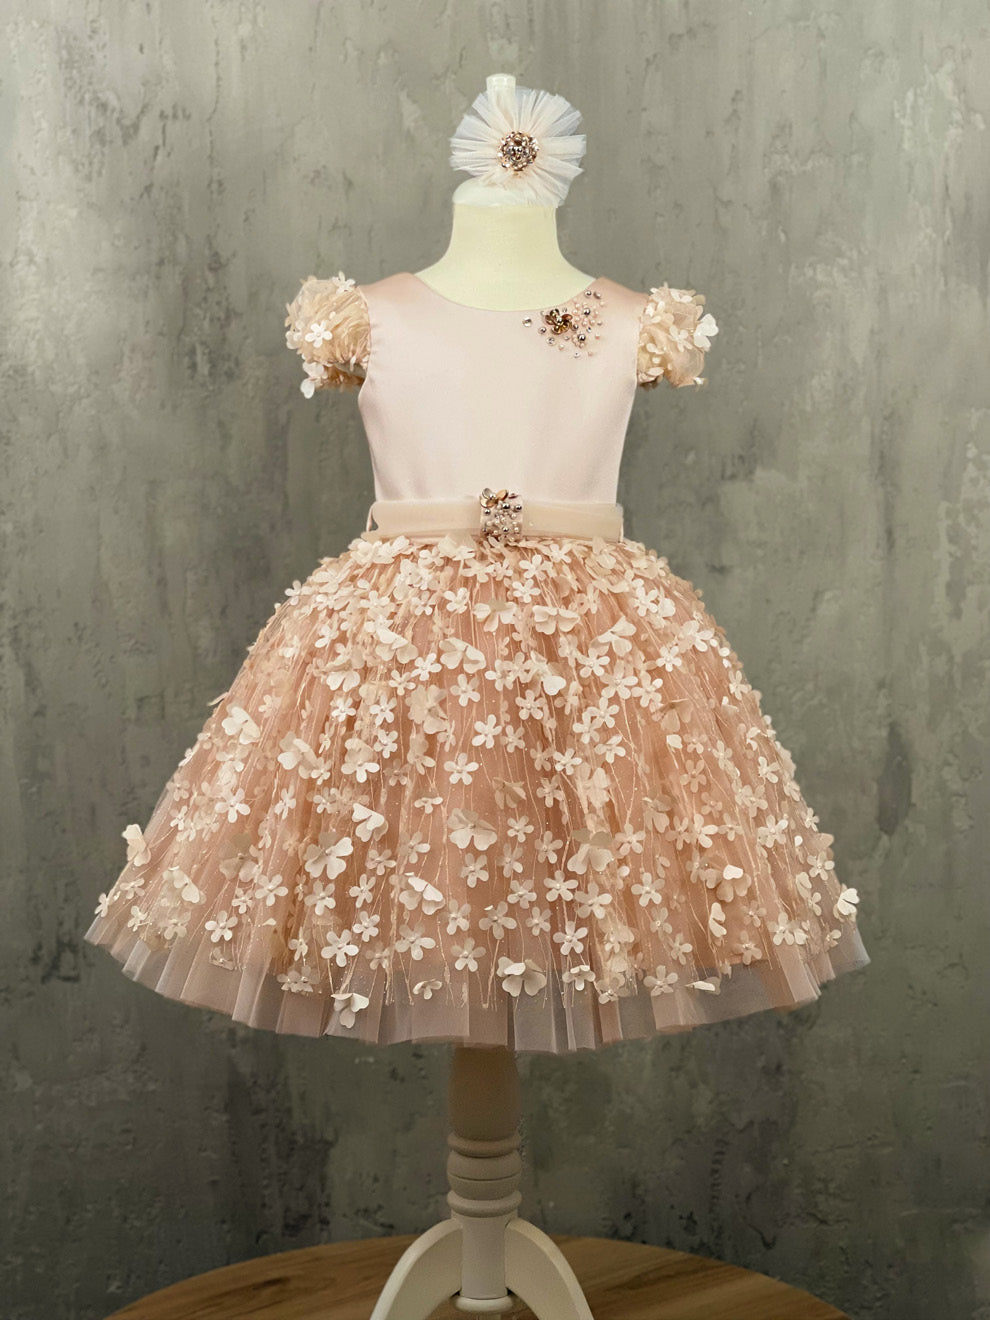 Lovely Peach Dress 2426